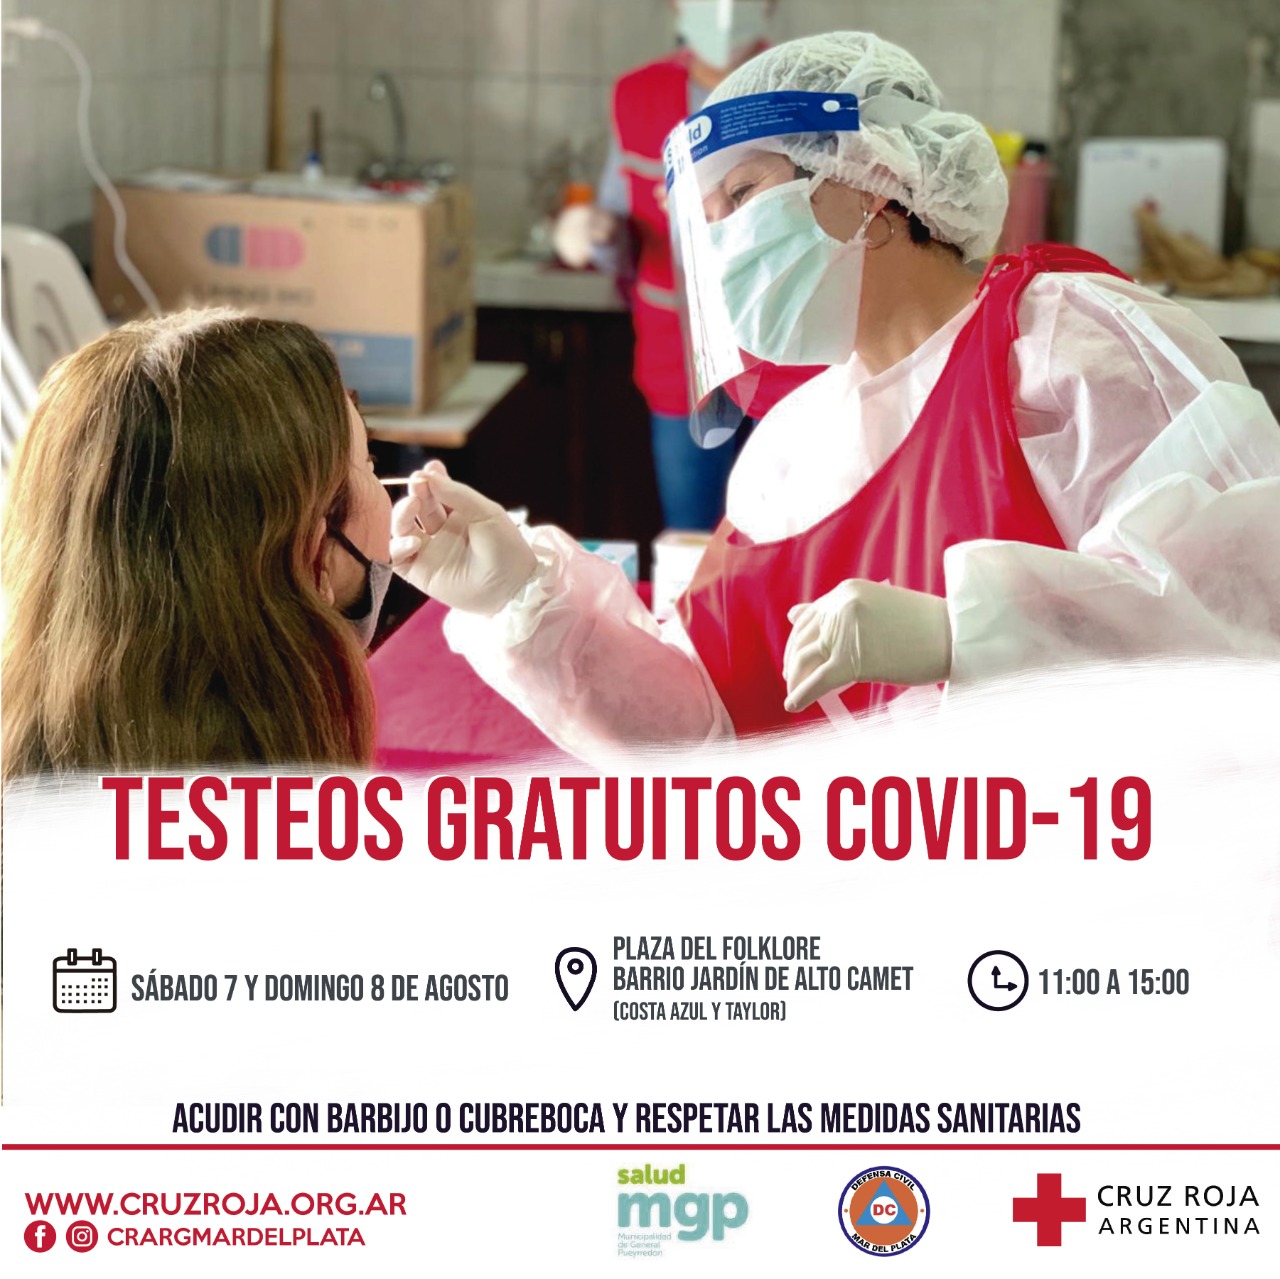 Nueva jornada gratuita de testeos Covid-19 de la Cruz Roja